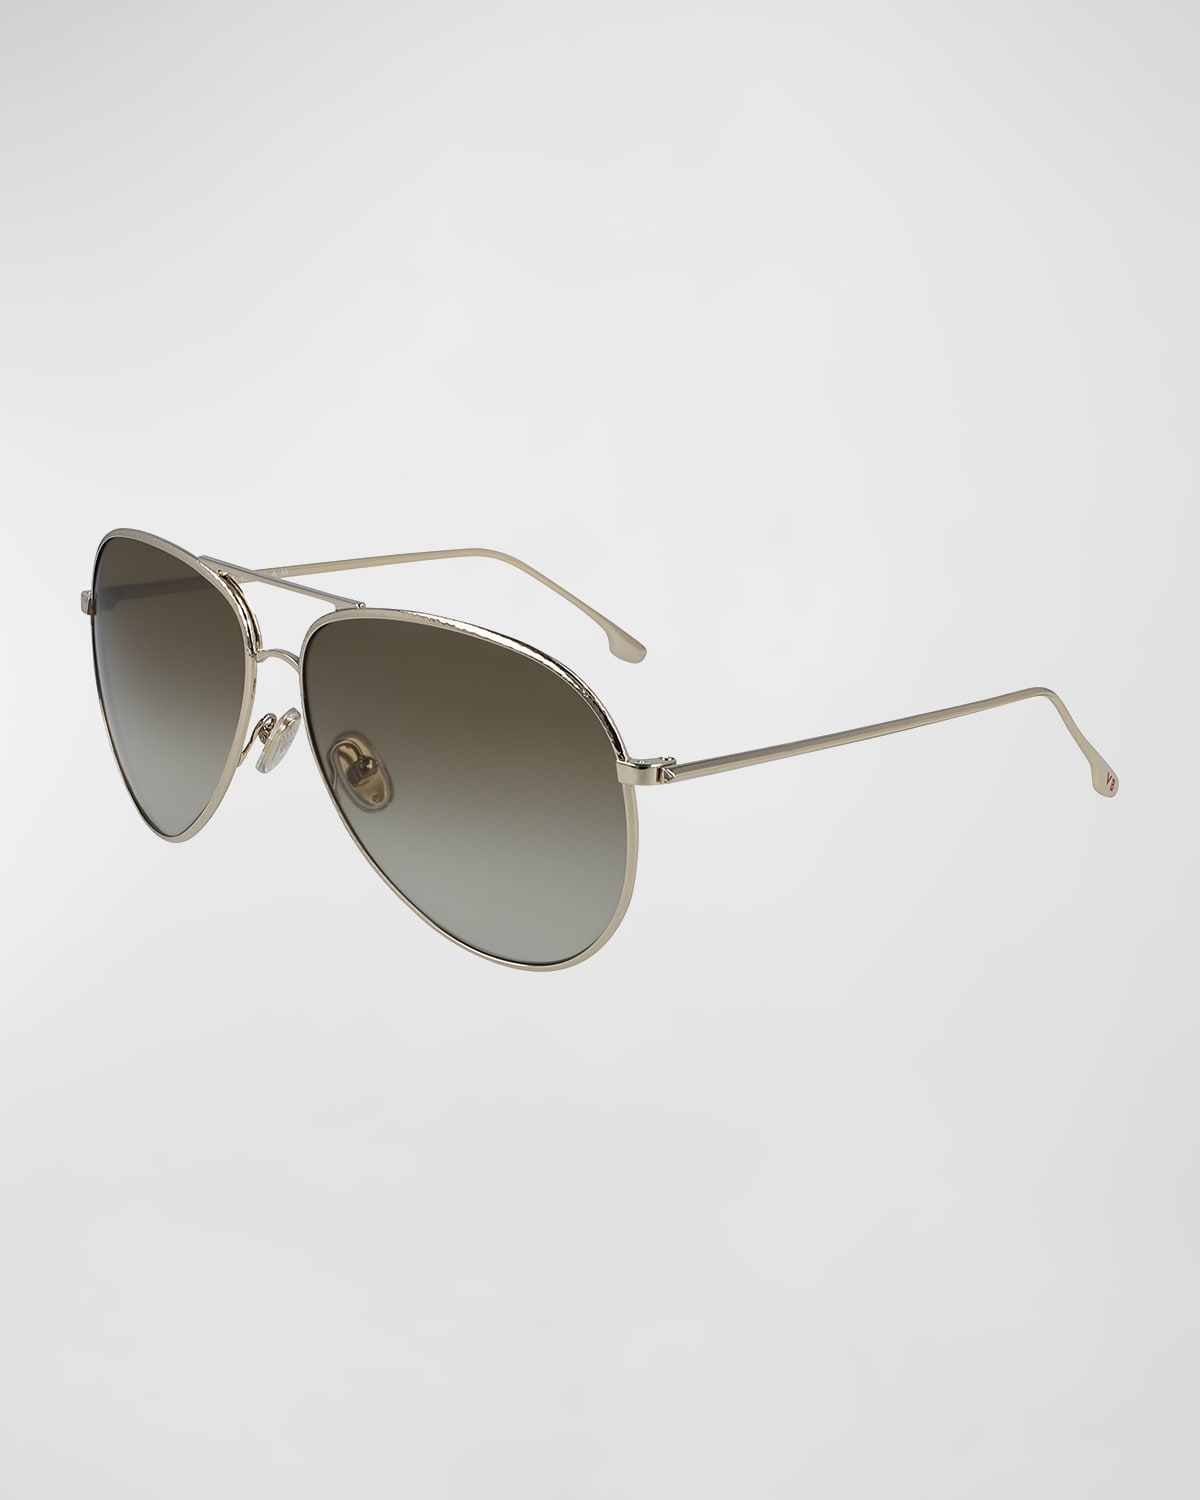 Victoria Beckham Khaki Aviator Ladies Sunglasses Vb203s 701 62 In Beige,gold Tone